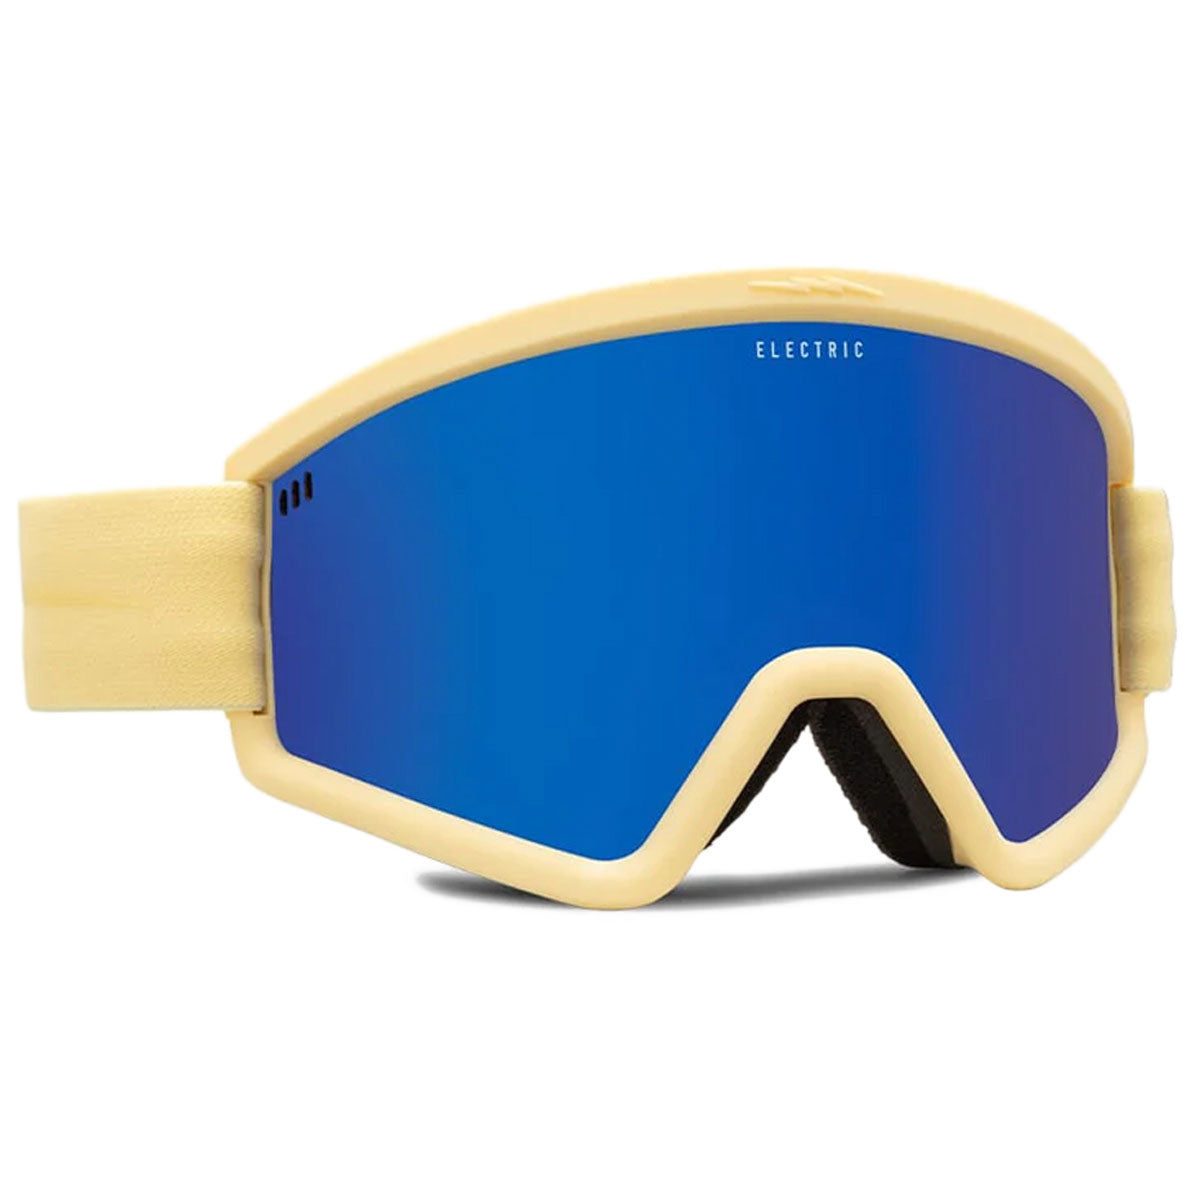 Electric Hex Snowboard Goggles - Matte Pollen/Blue Chrome image 1